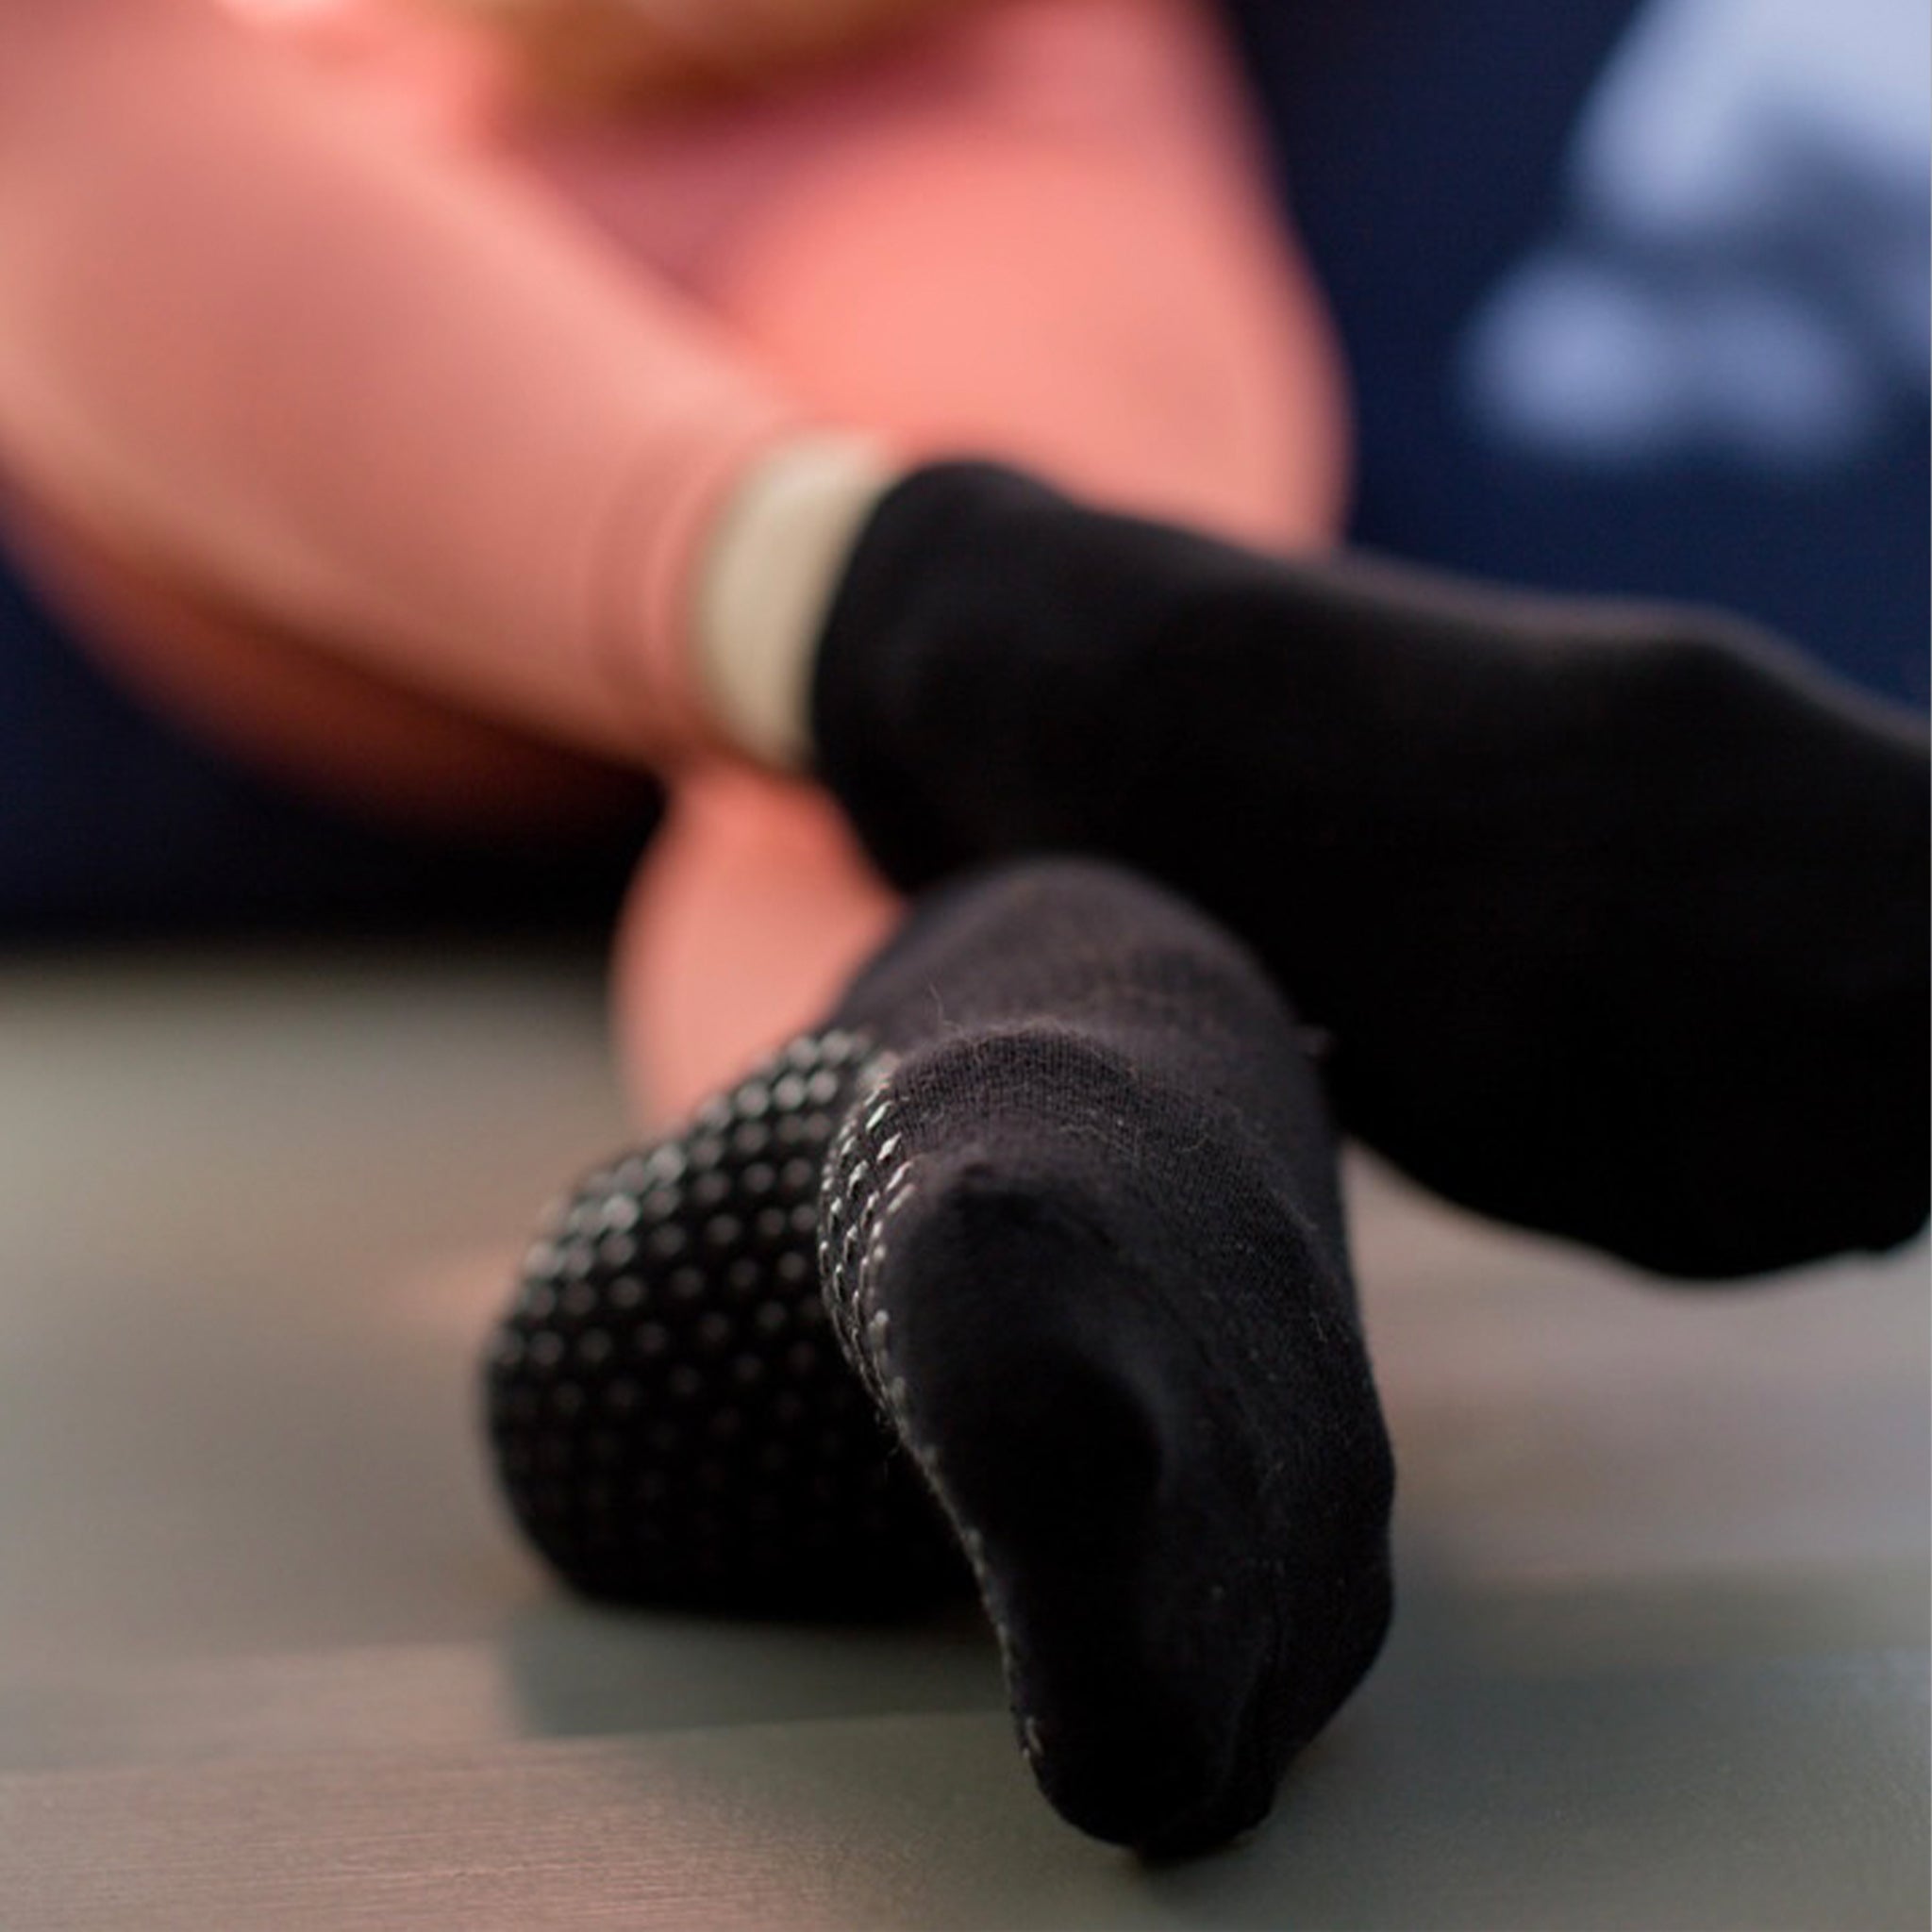 Classic Low Rise Grip Socks - Black